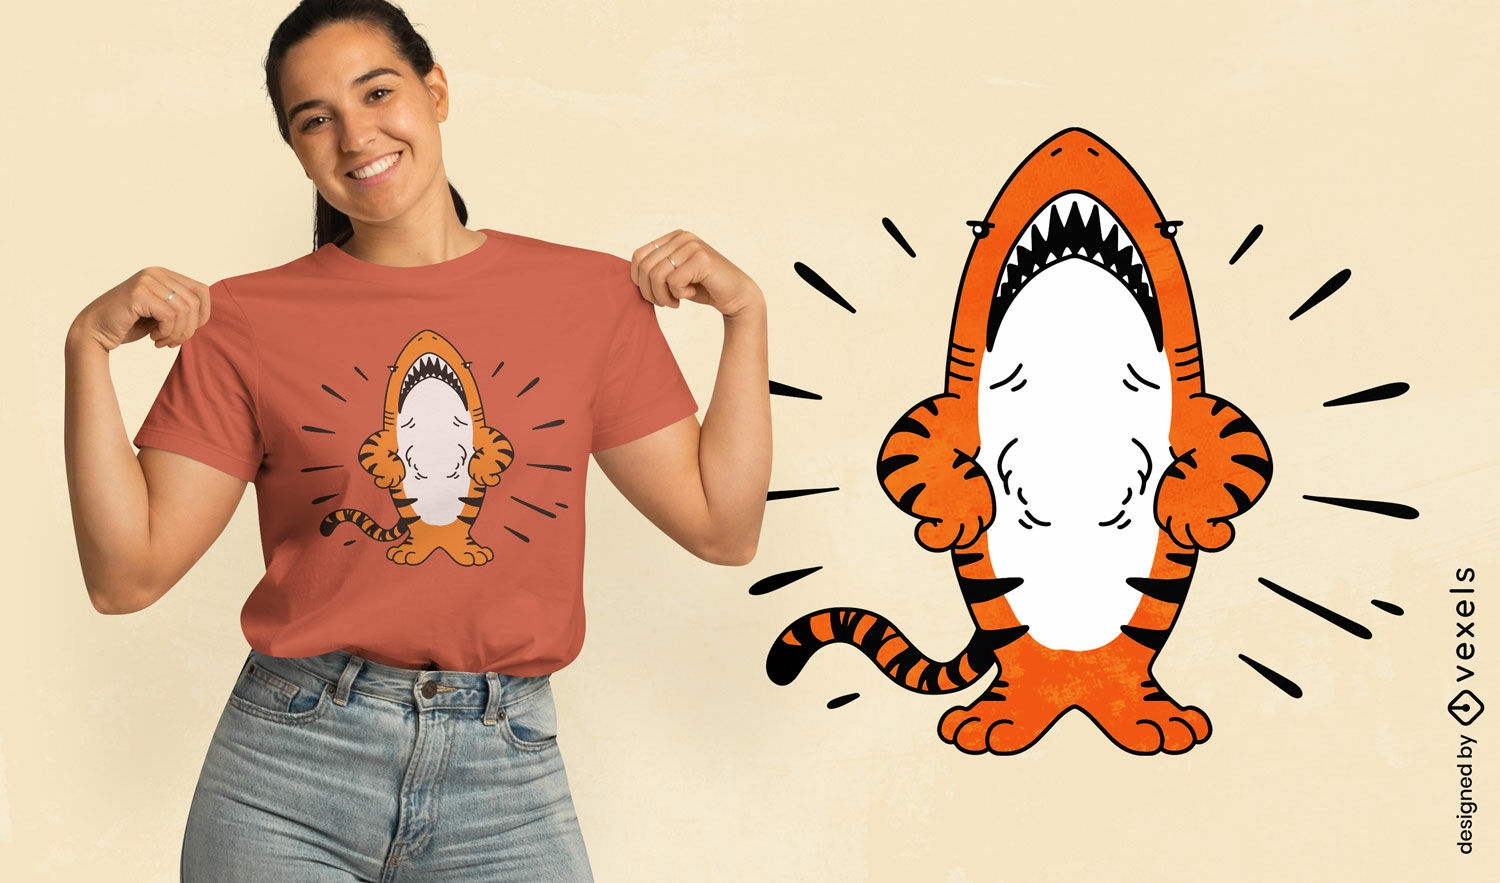 Shark tiger t-shirt design